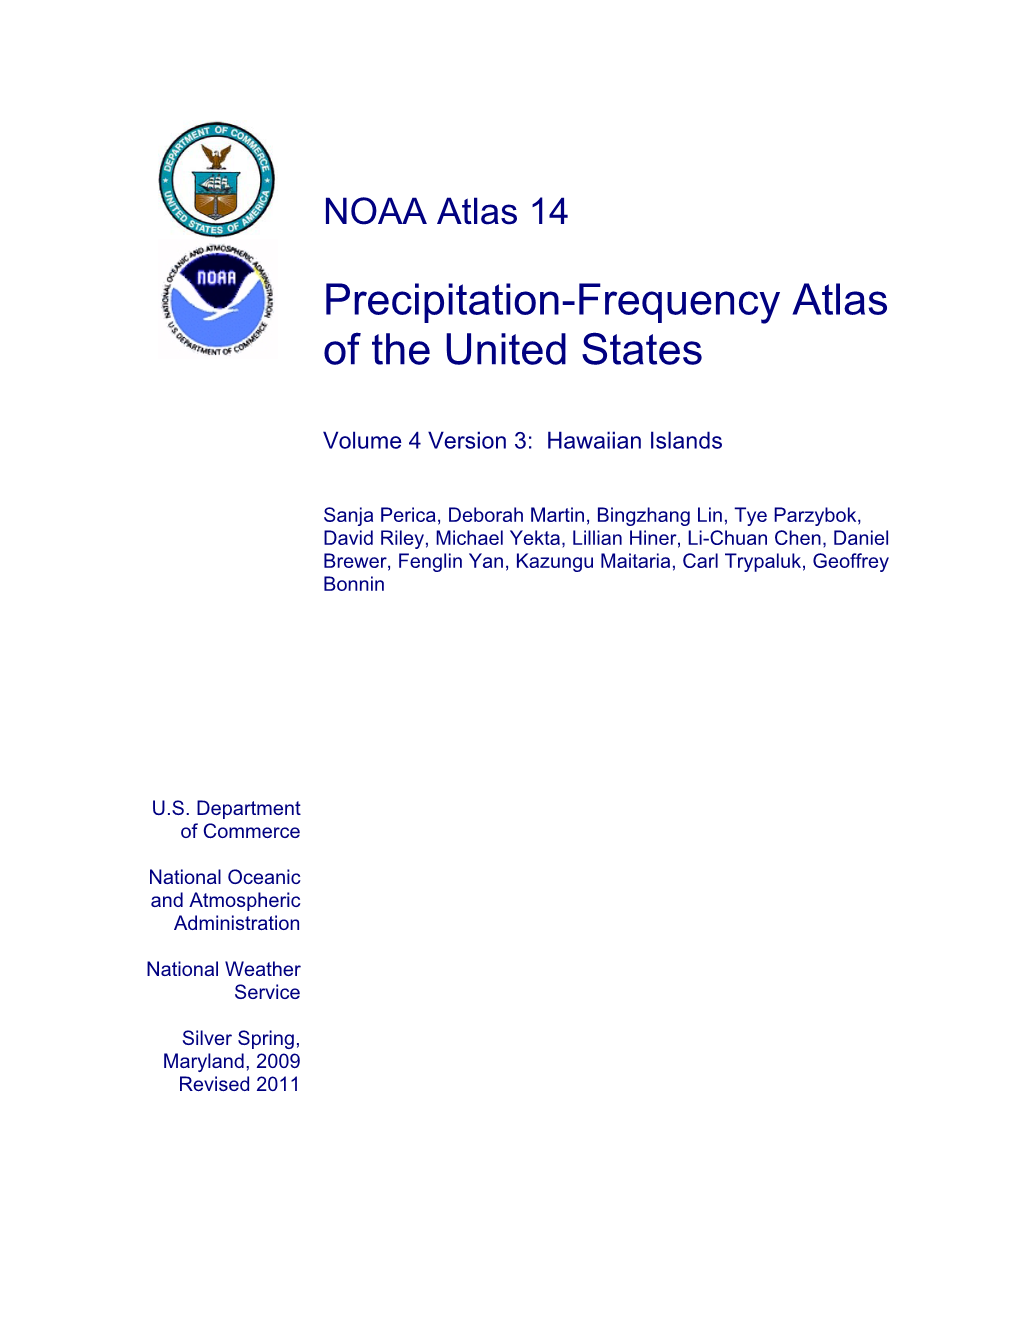 NOAA Atlas 14 Vol 4